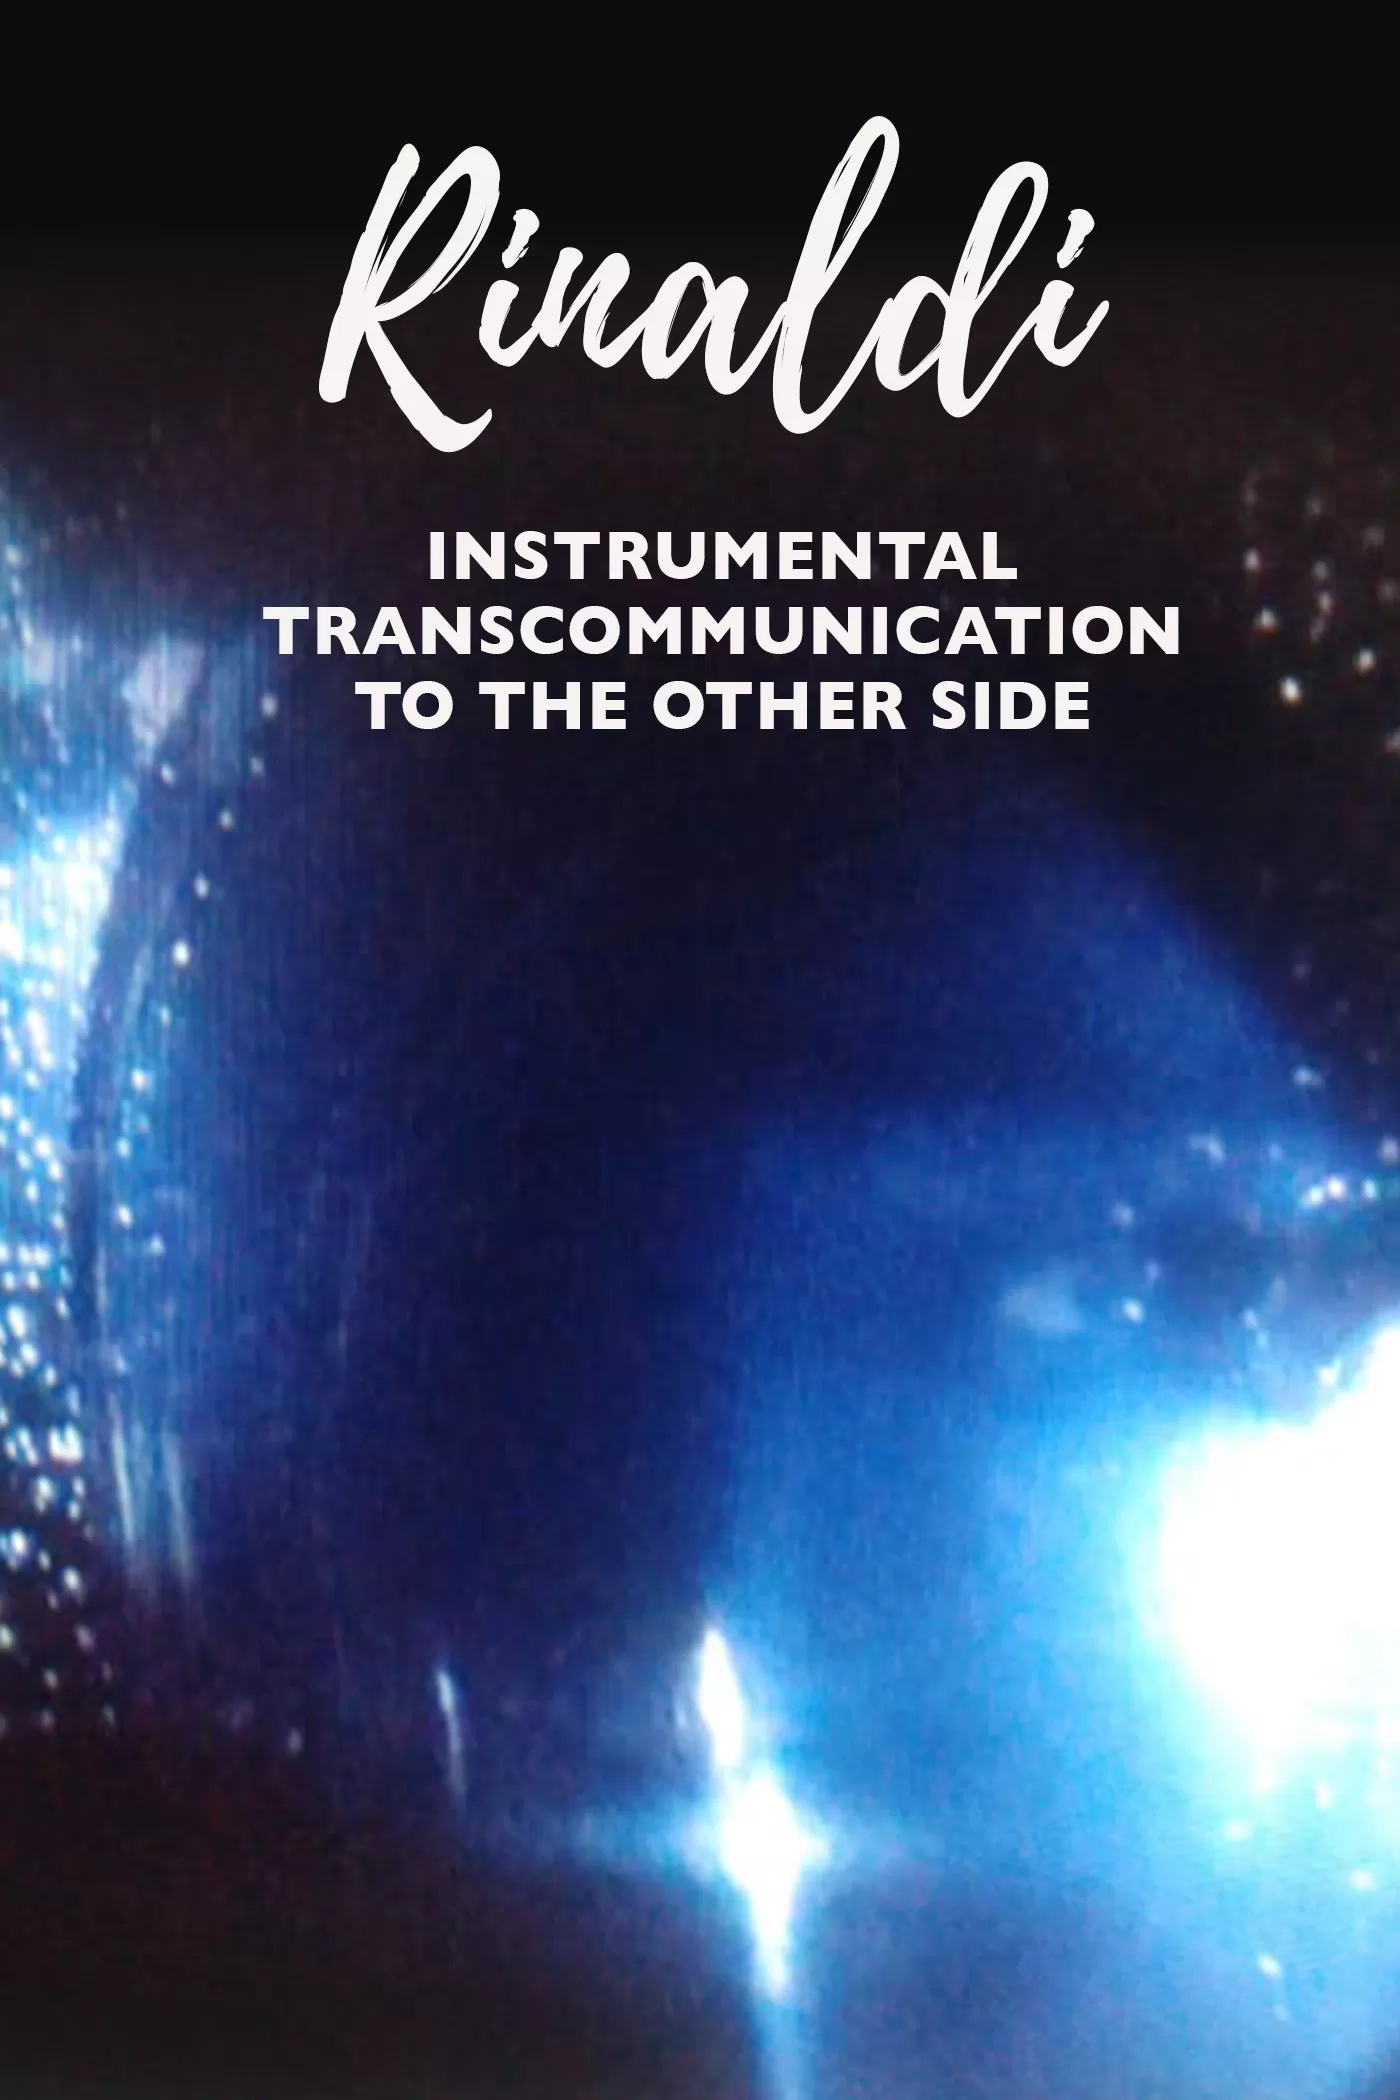 Rinaldi: Instrumental Transcommunication to the Other Side